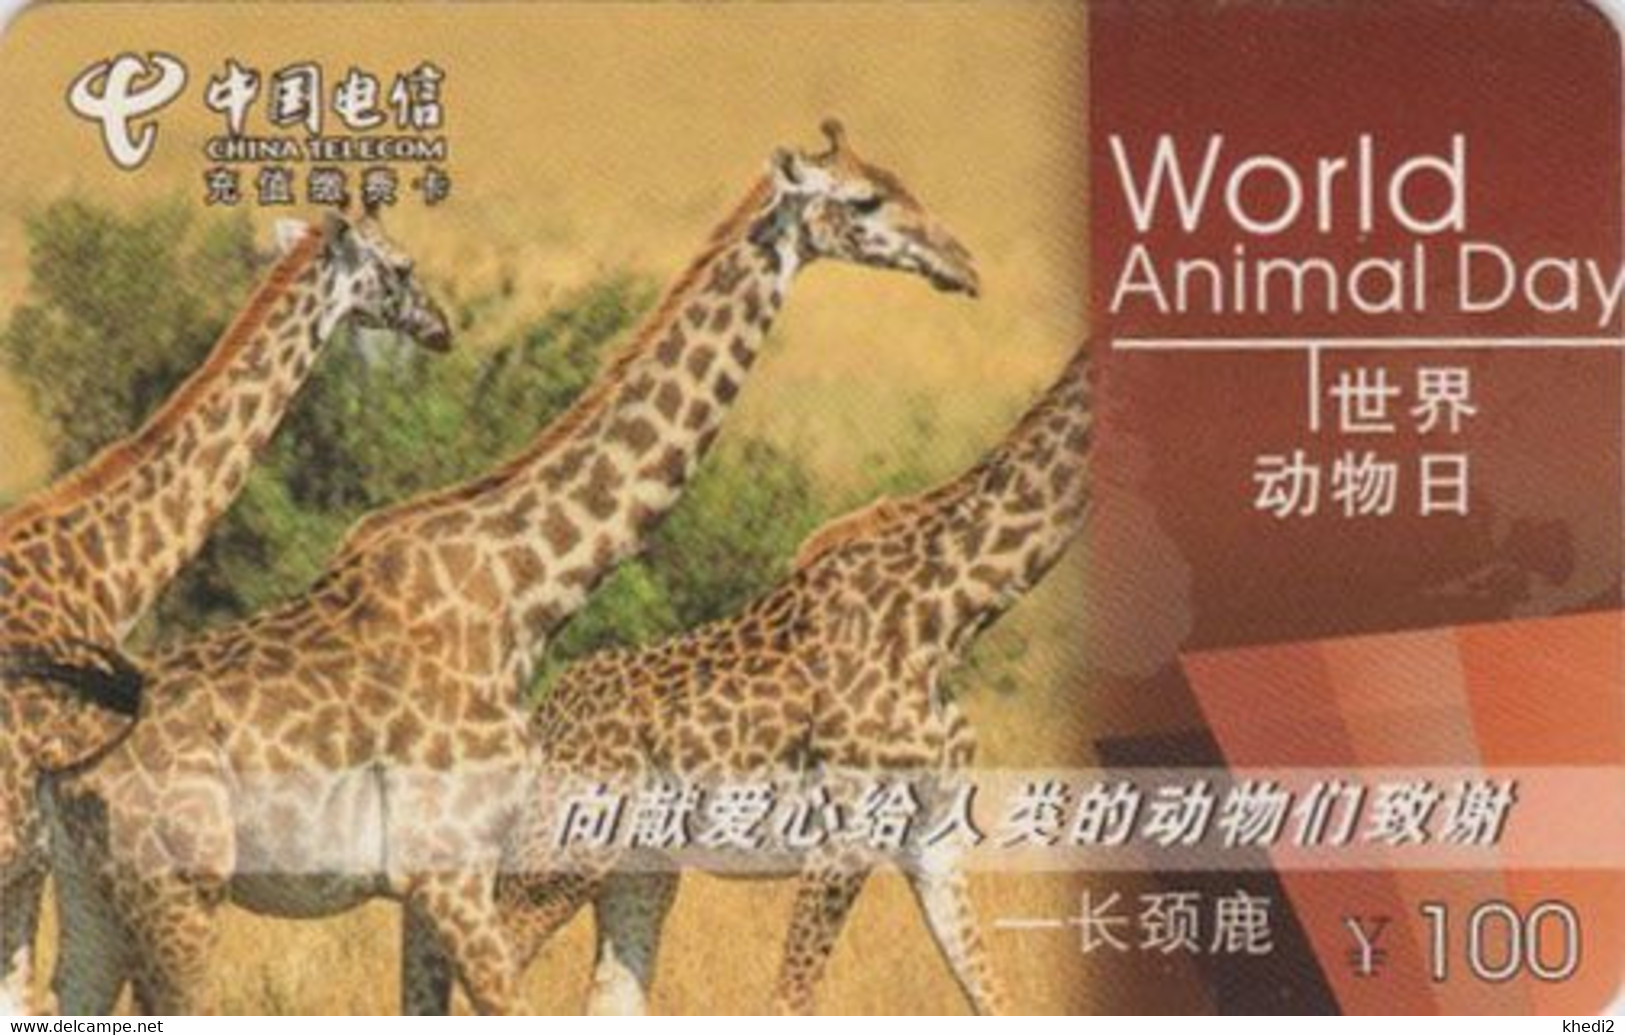 Télécarte CHINE / SERIE WORLD ANIMAL DAY - GIRAFE - GIRAFFE CHINA TELECOM Phonecard - China